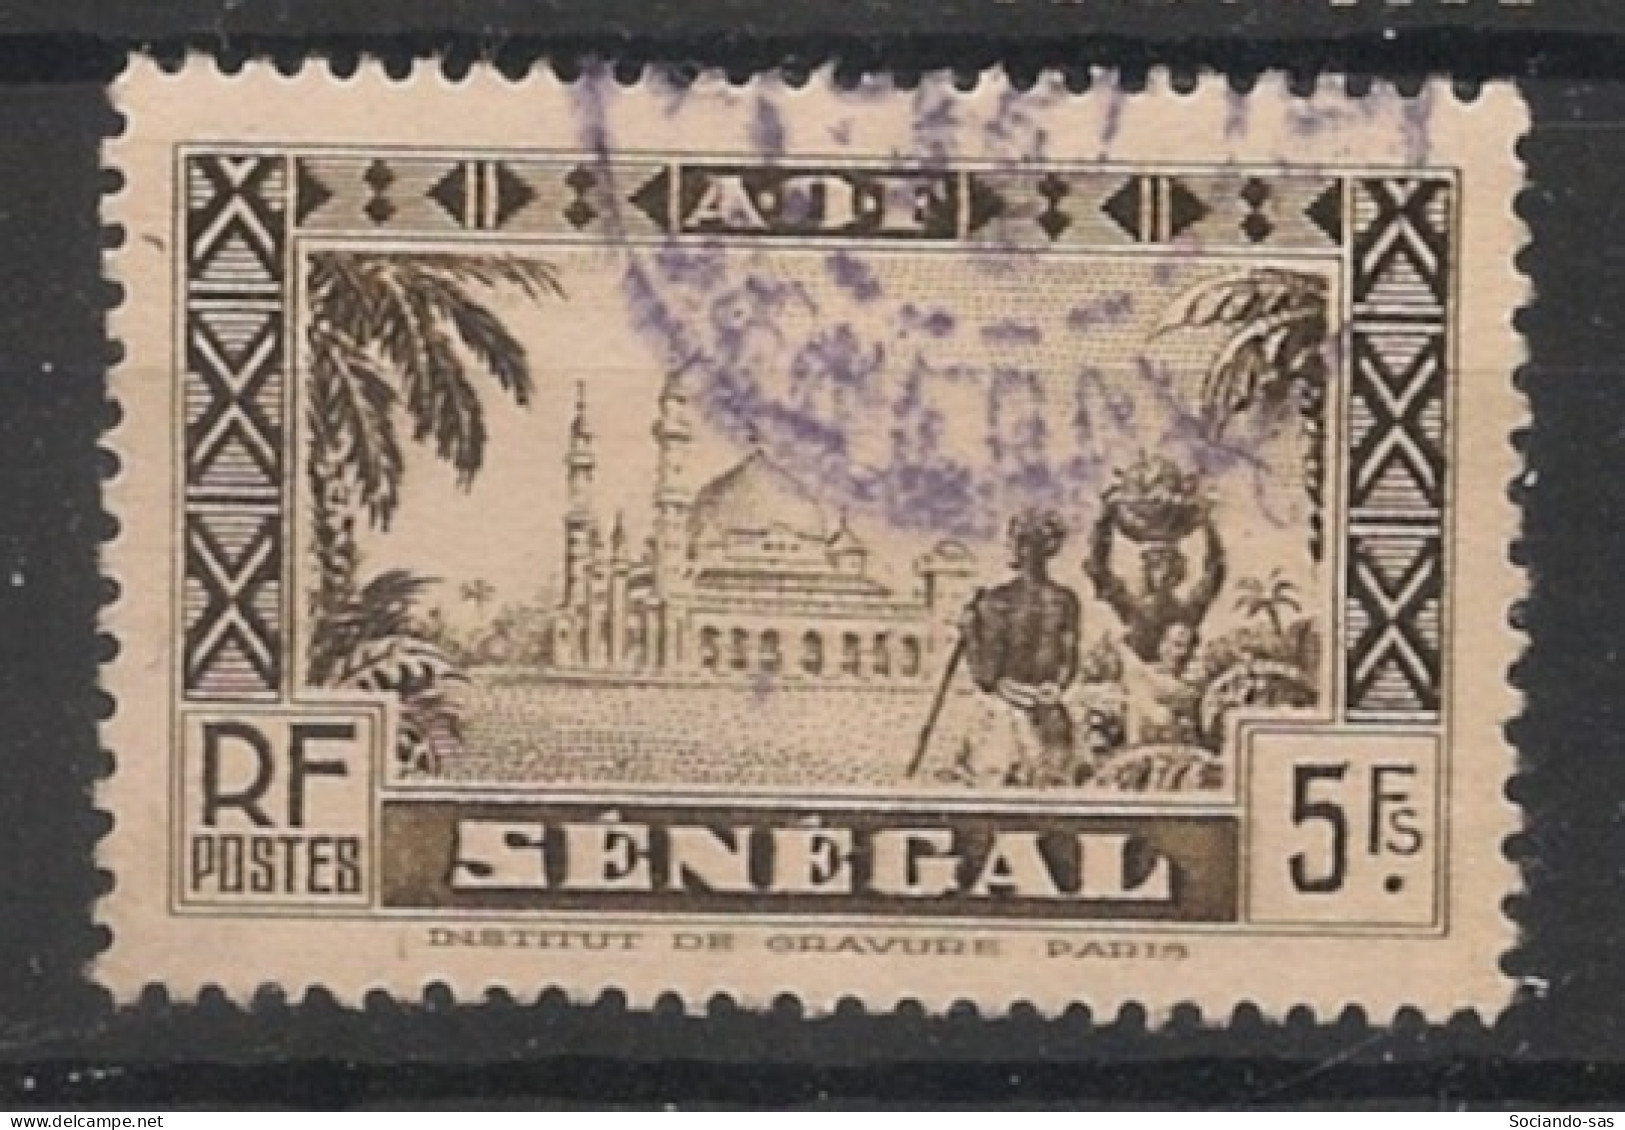 SENEGAL - 1935 - N°YT. 135 - Mosquée De Djourbel 5f Brun-gris - Oblitéré / Used - Gebraucht